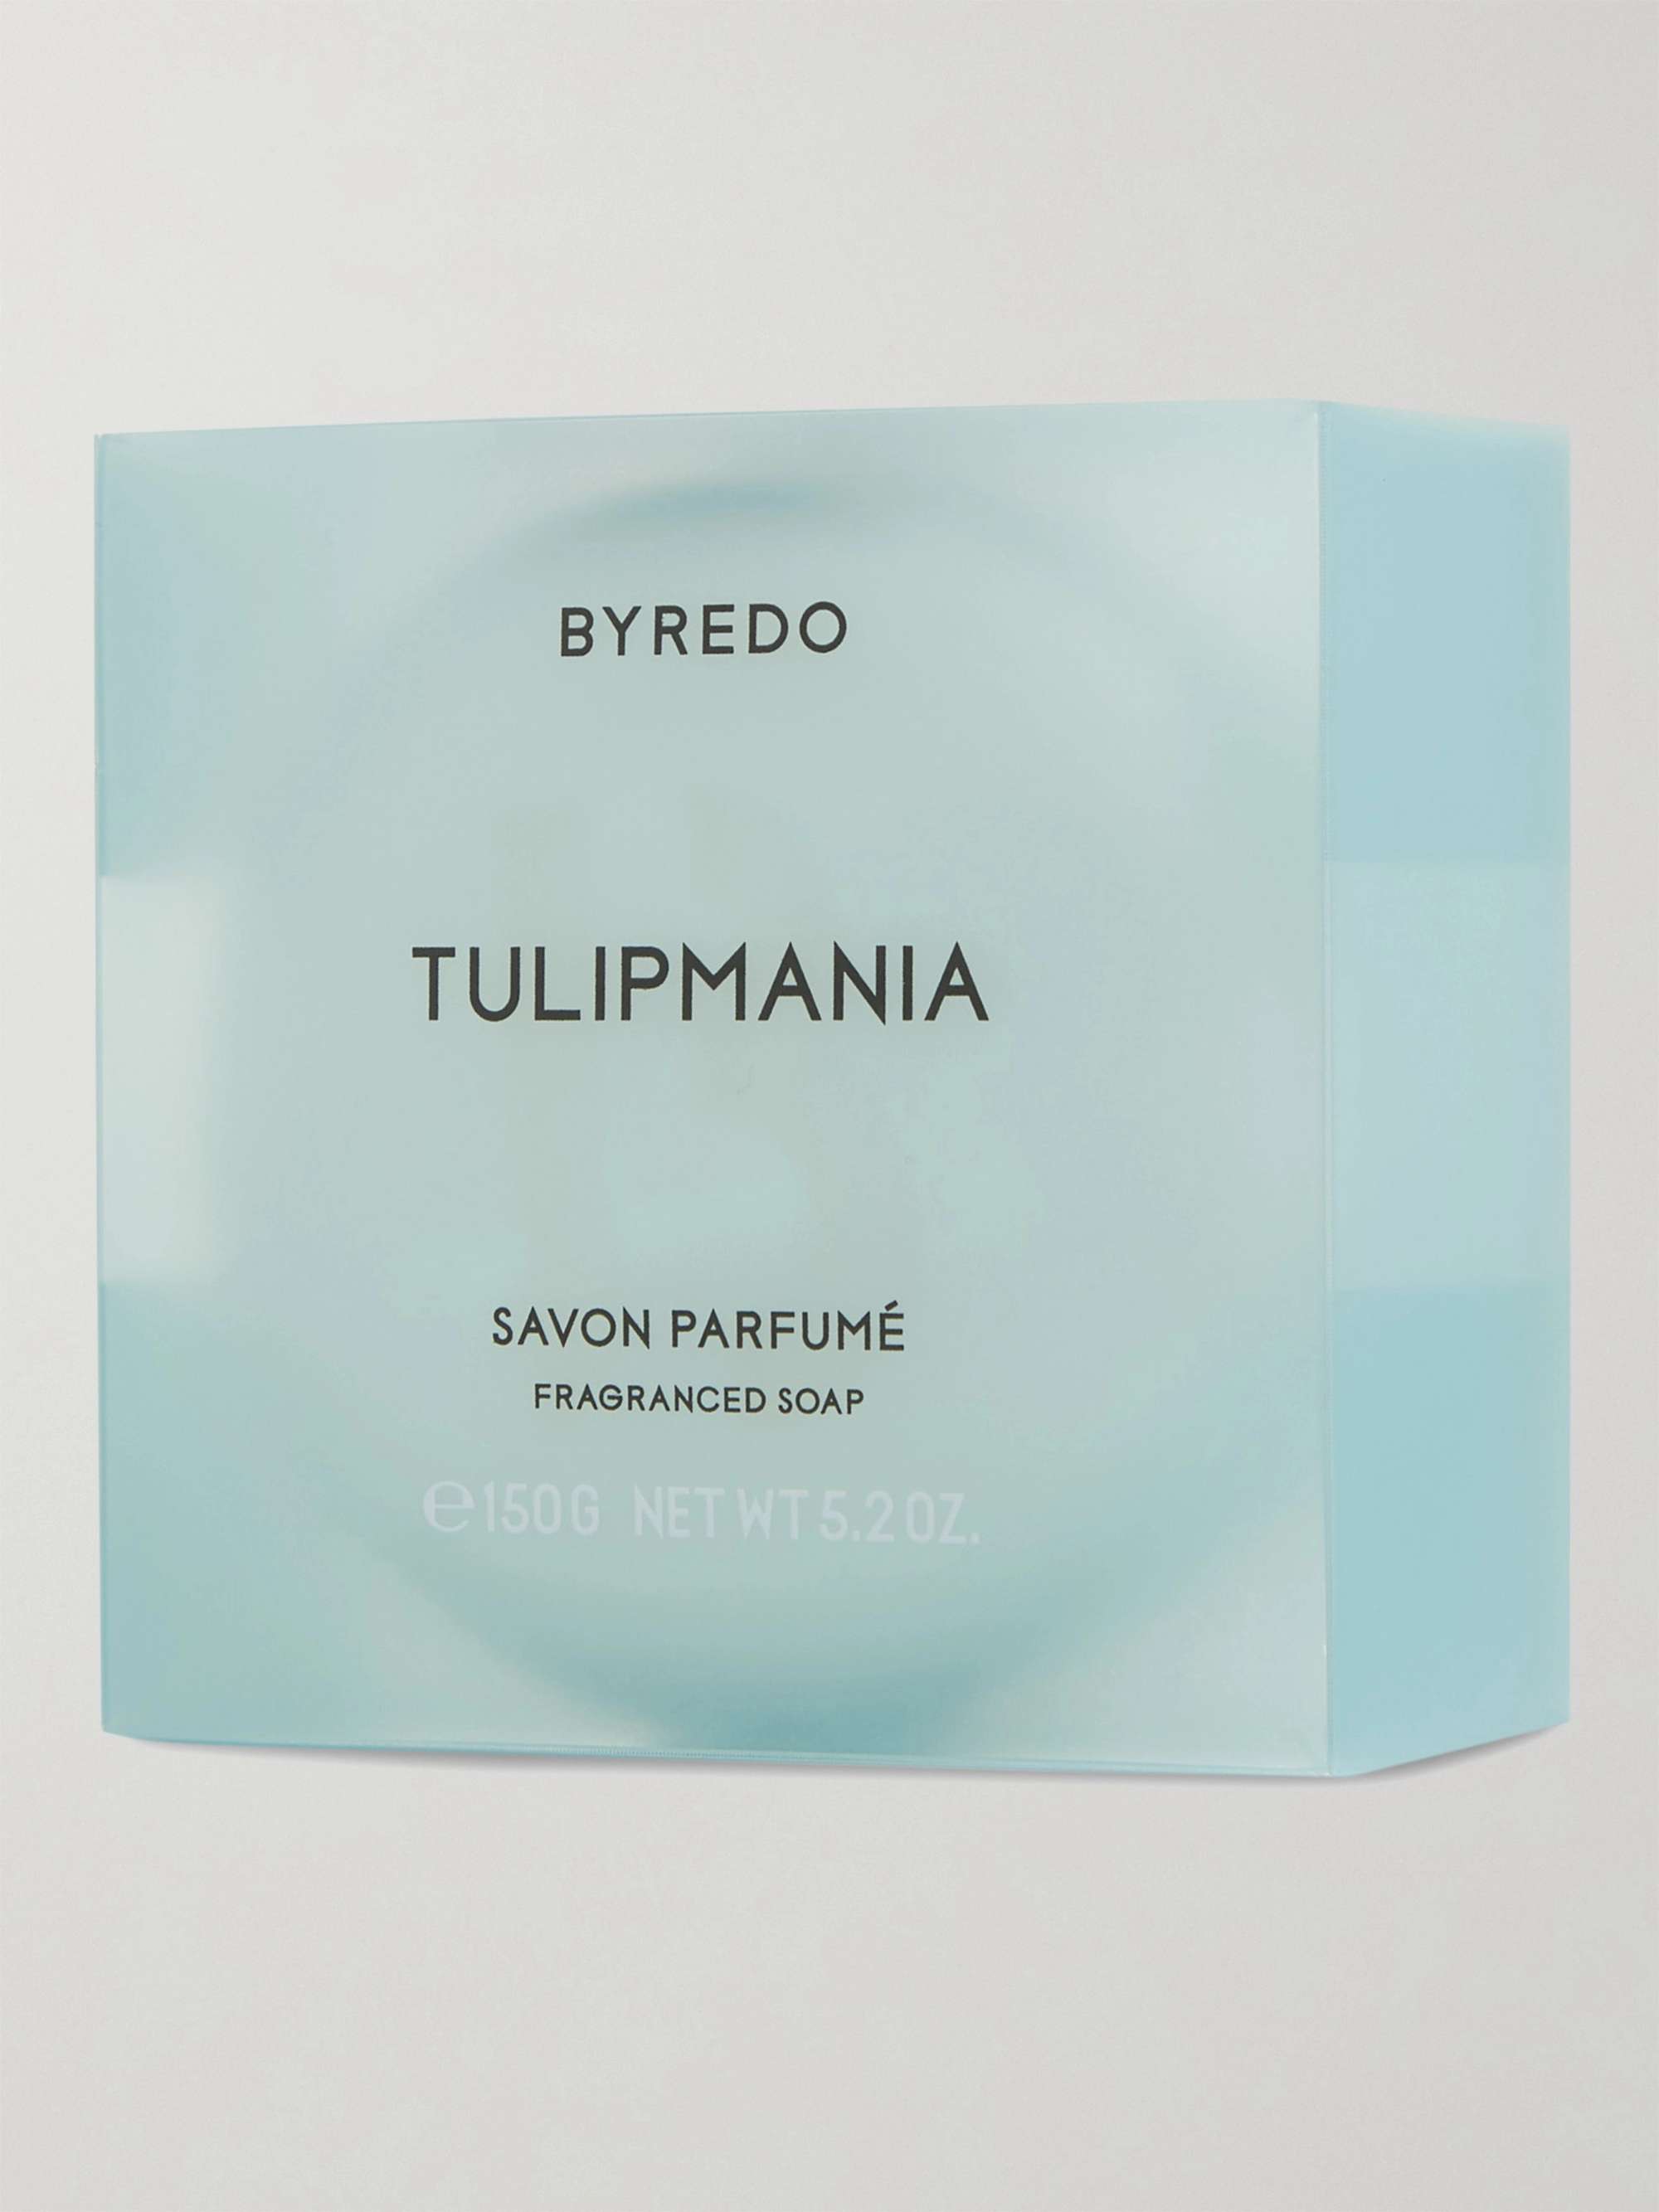 BYREDO Tulipmania Soap, 150g